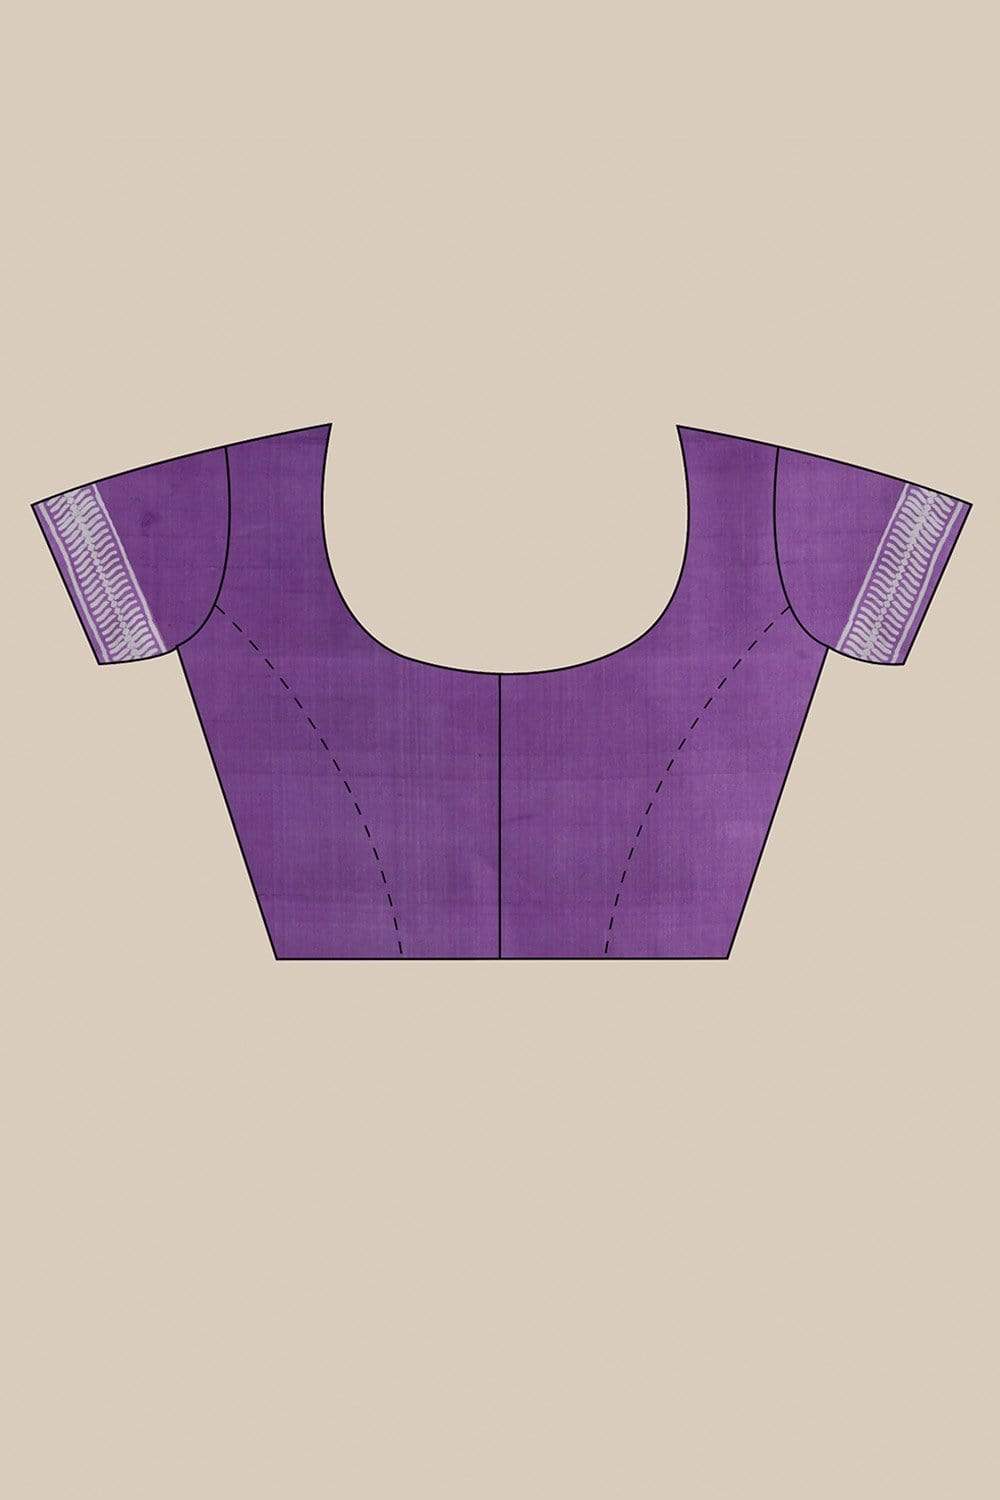 Iris Purple Cotton Silk Handloom Saree